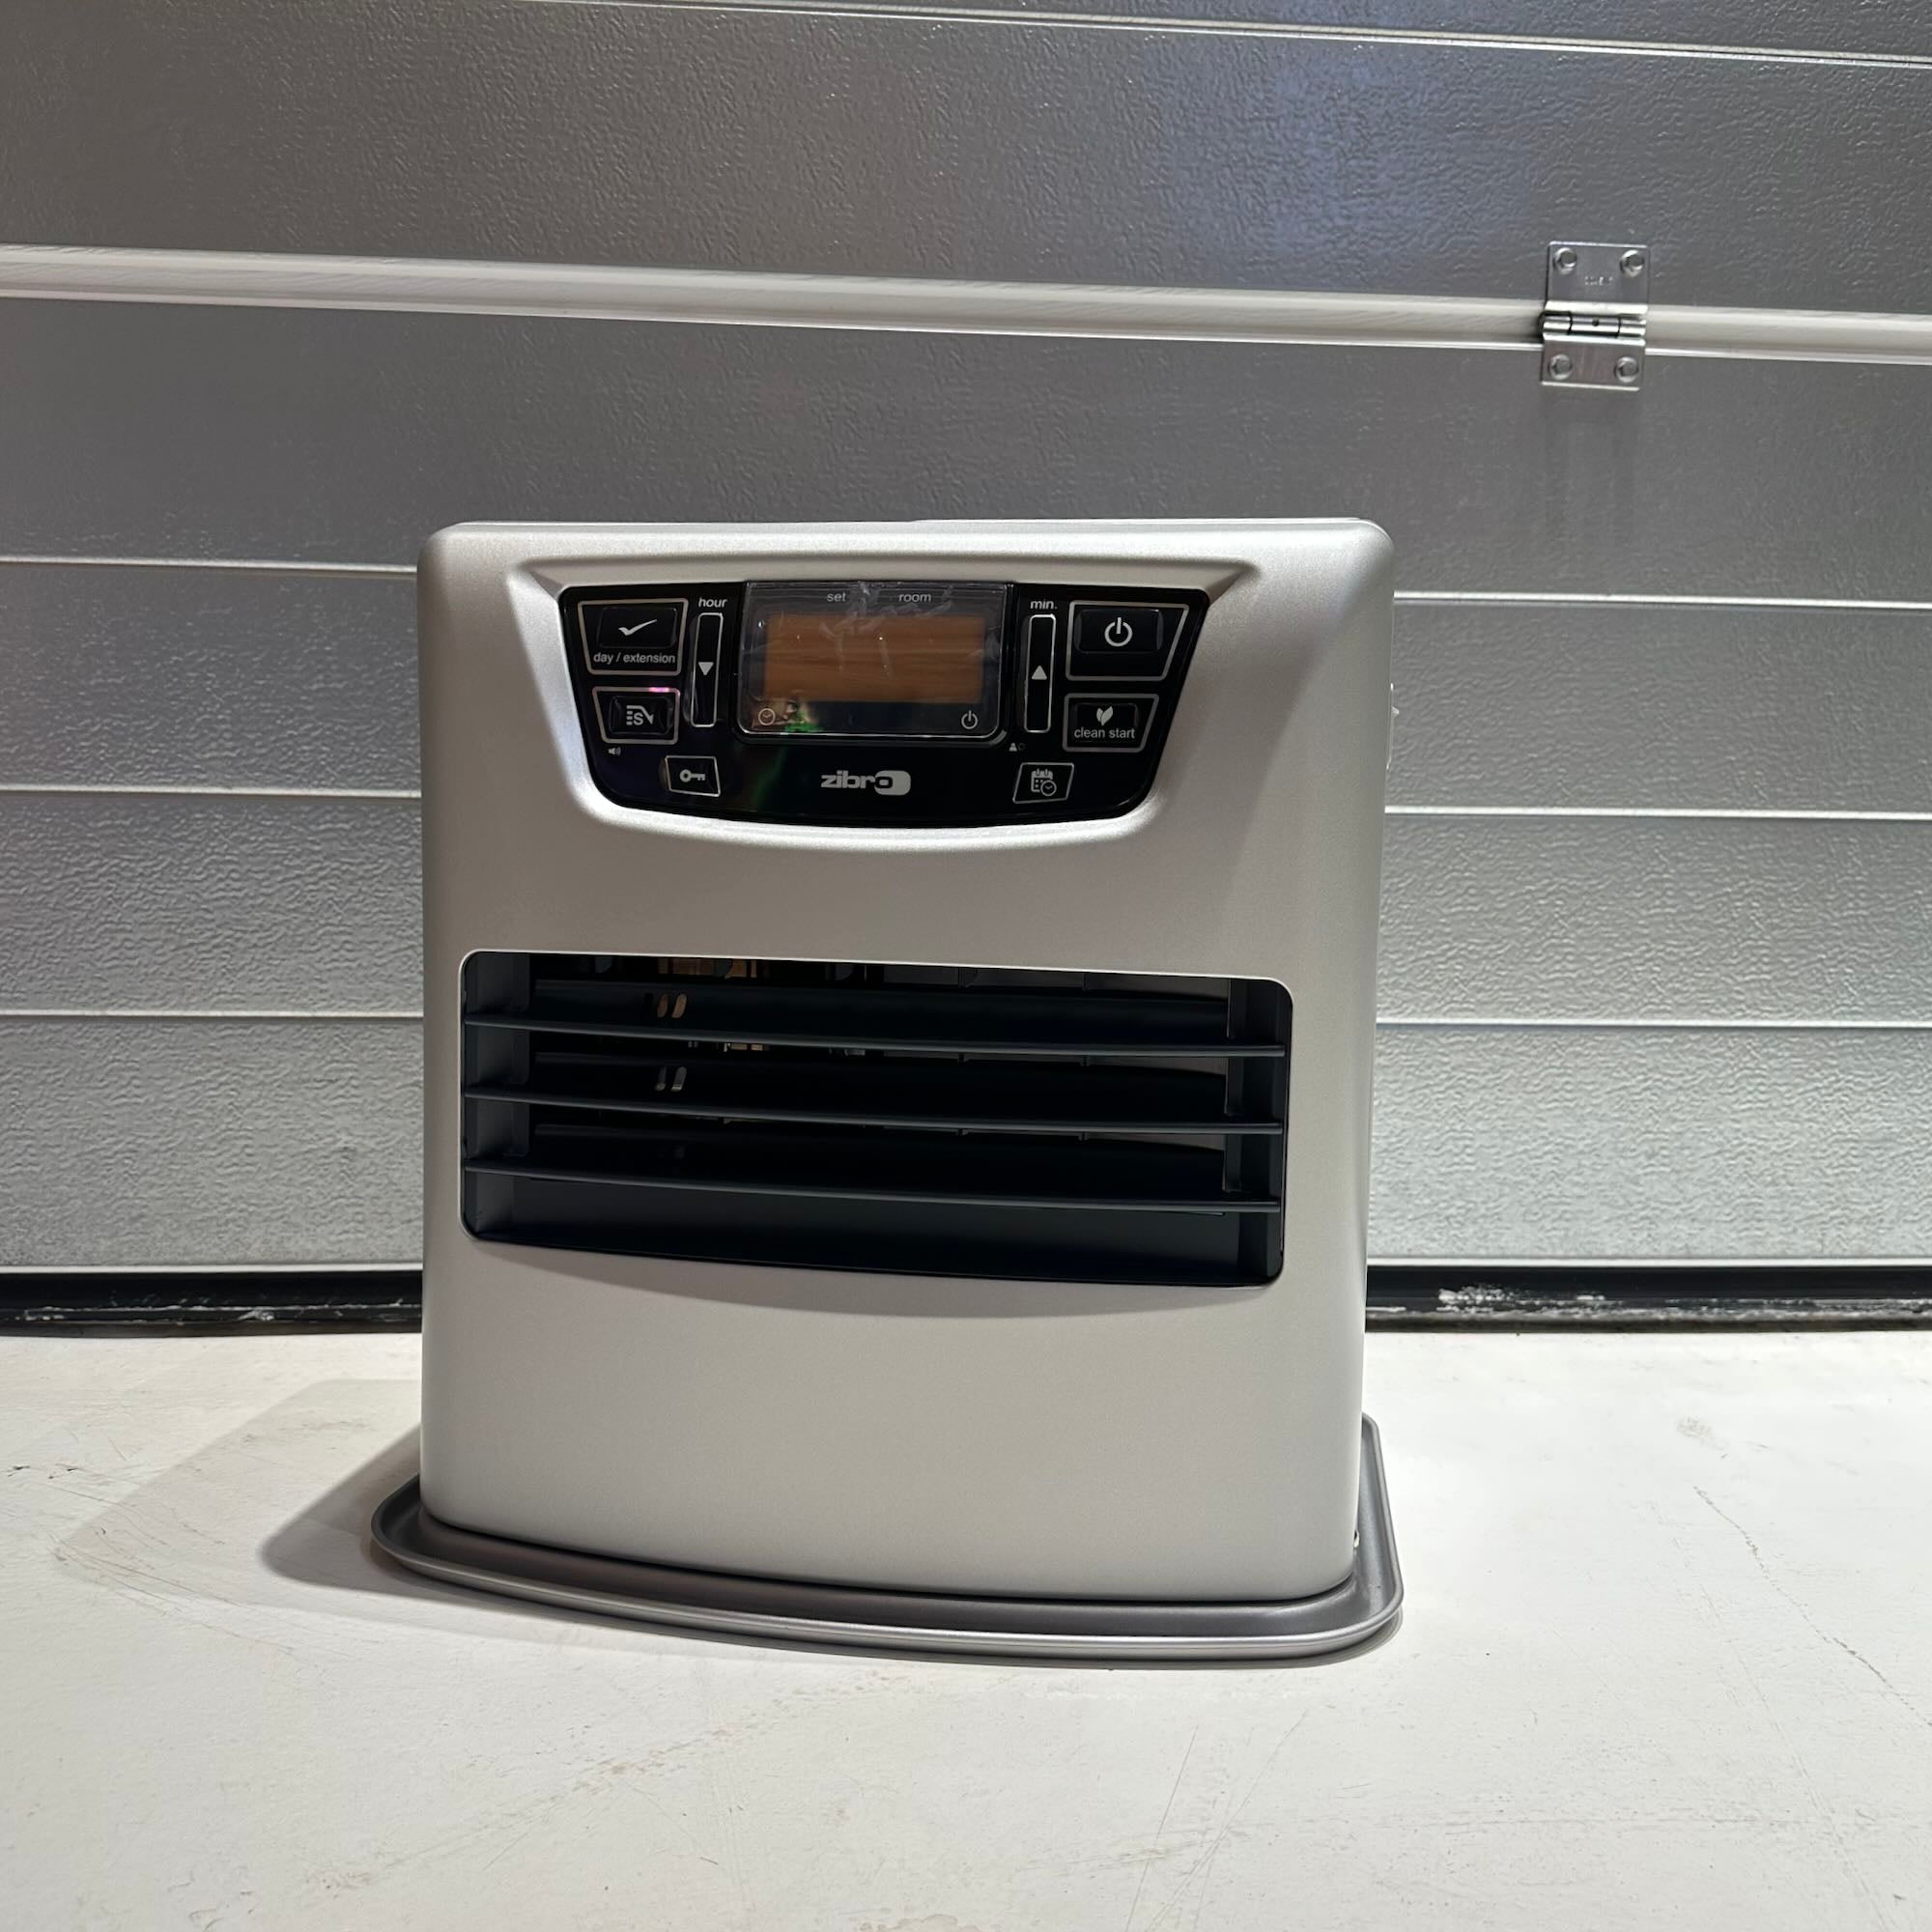 Zibro LC-140 incl. hand pump awning heater for medium awnings